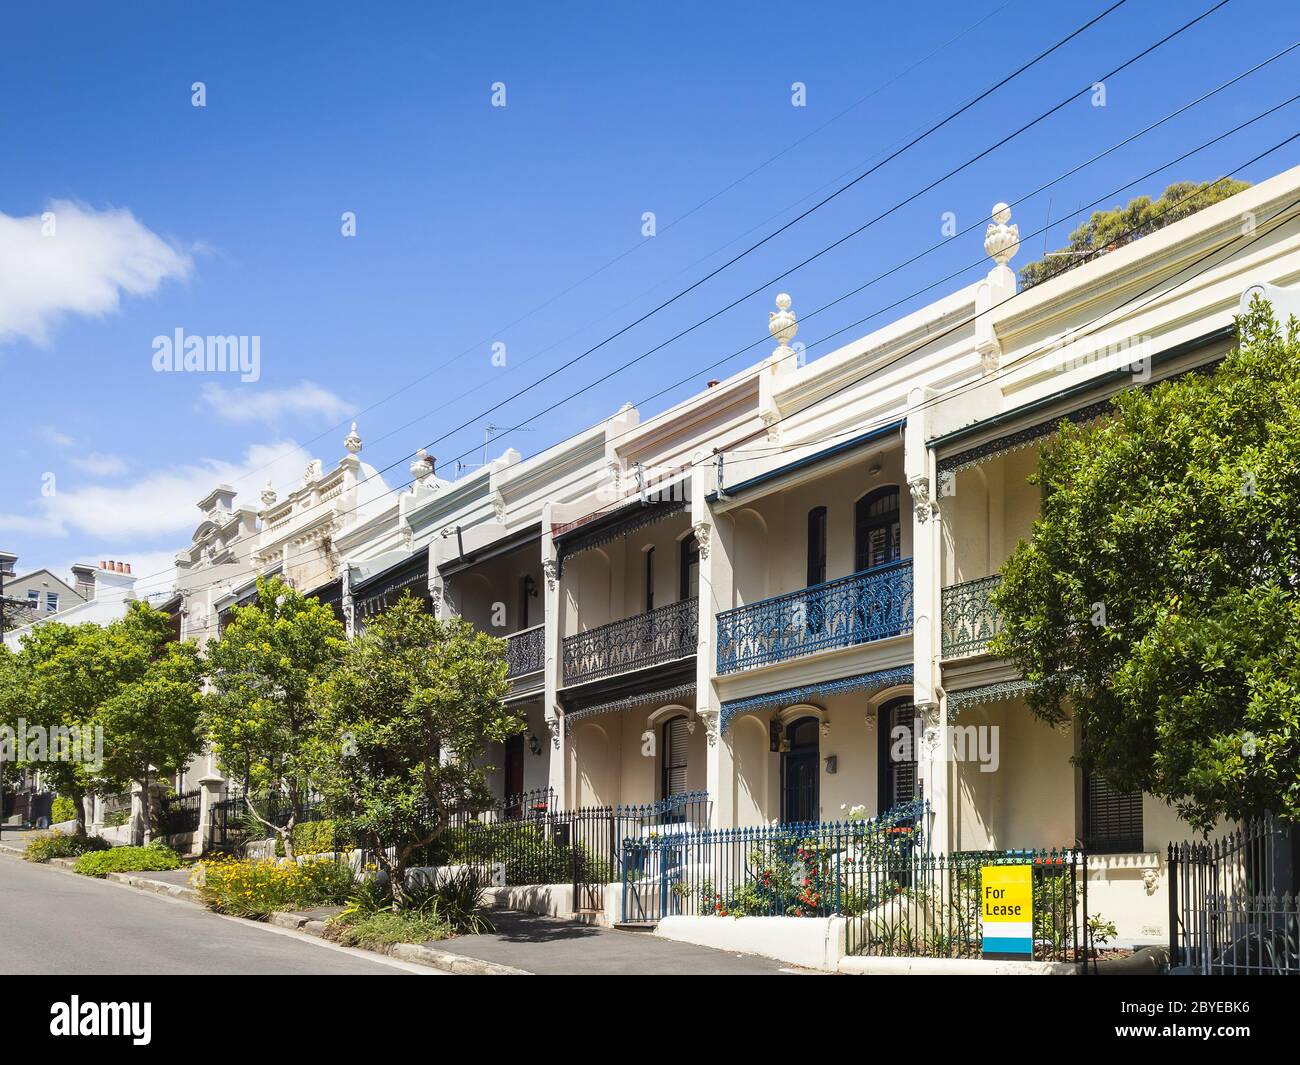 Terrace house paddington hi-res stock photography and images - Alamy